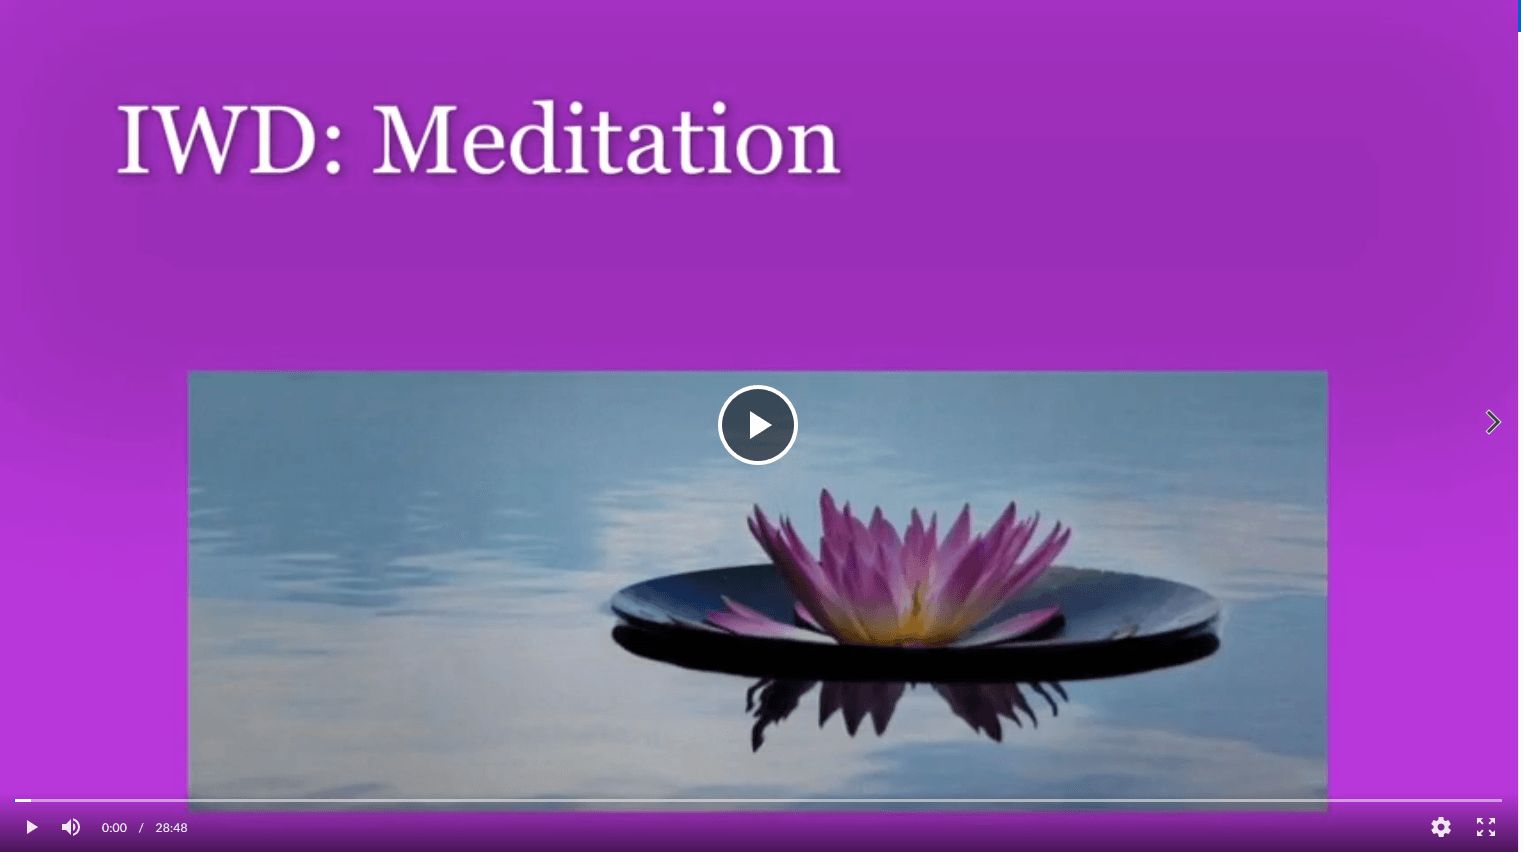 IWD: Meditation